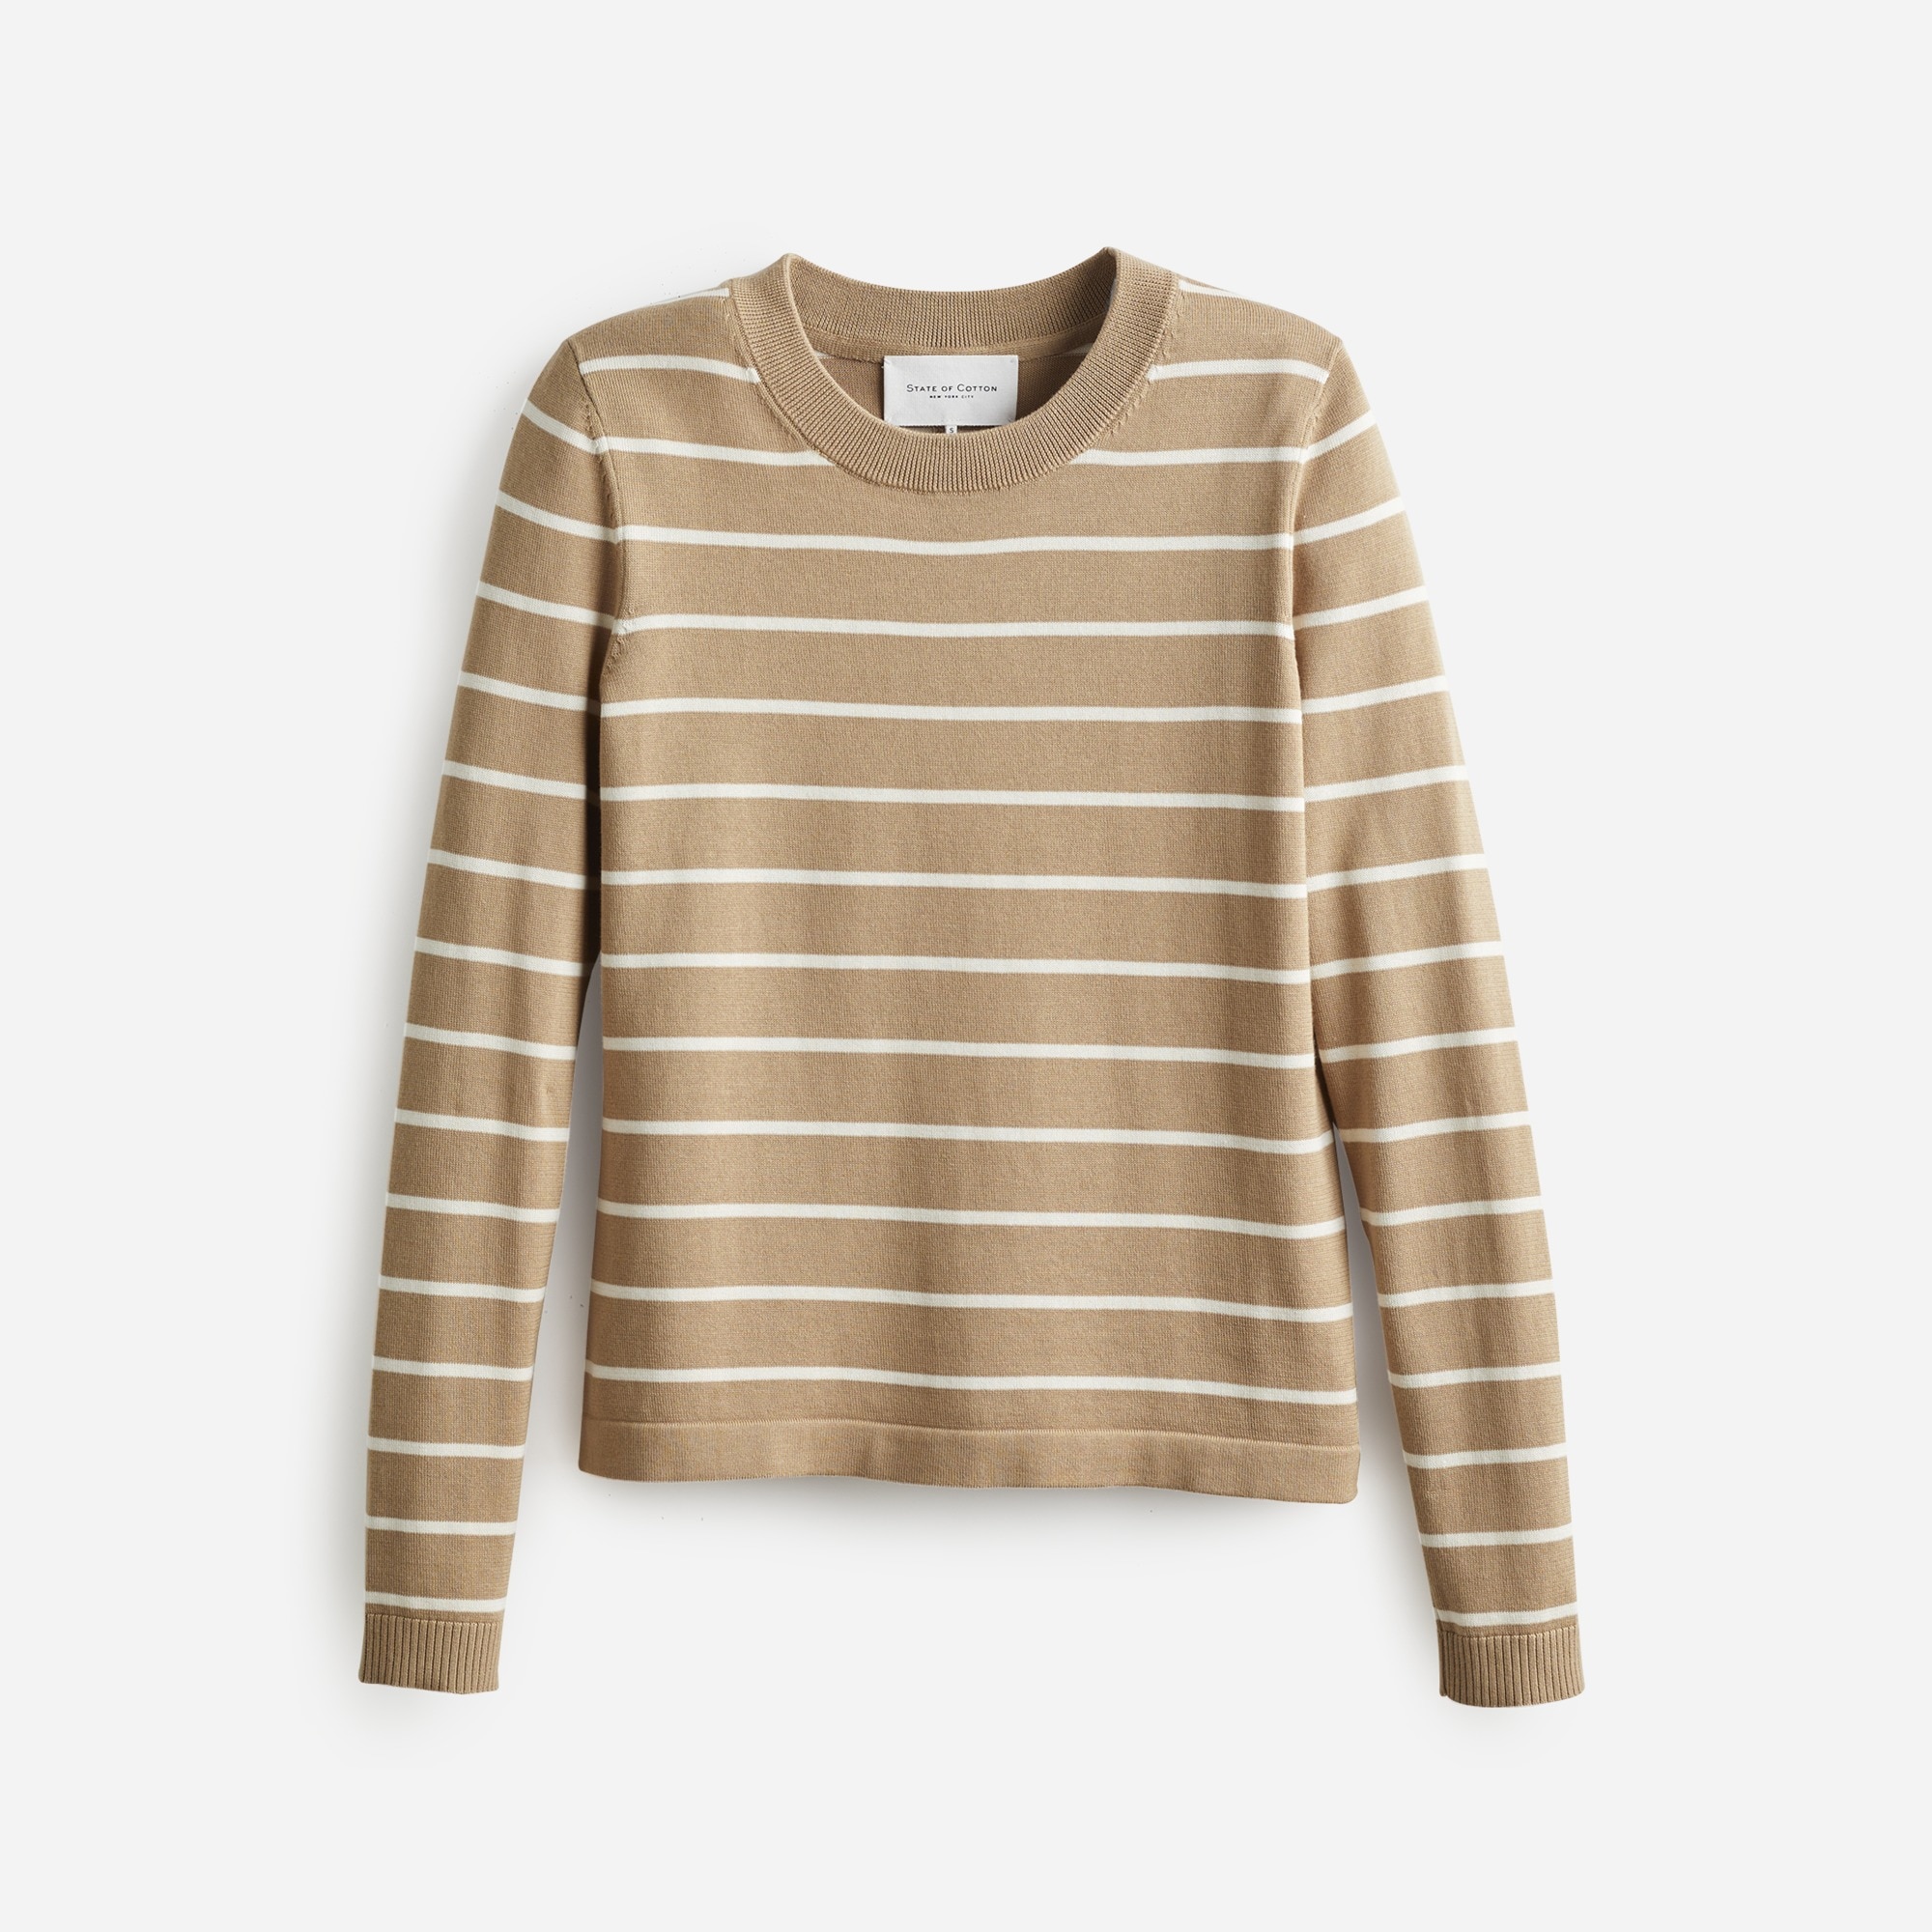  State of Cotton NYC Devon striped crewneck sweater